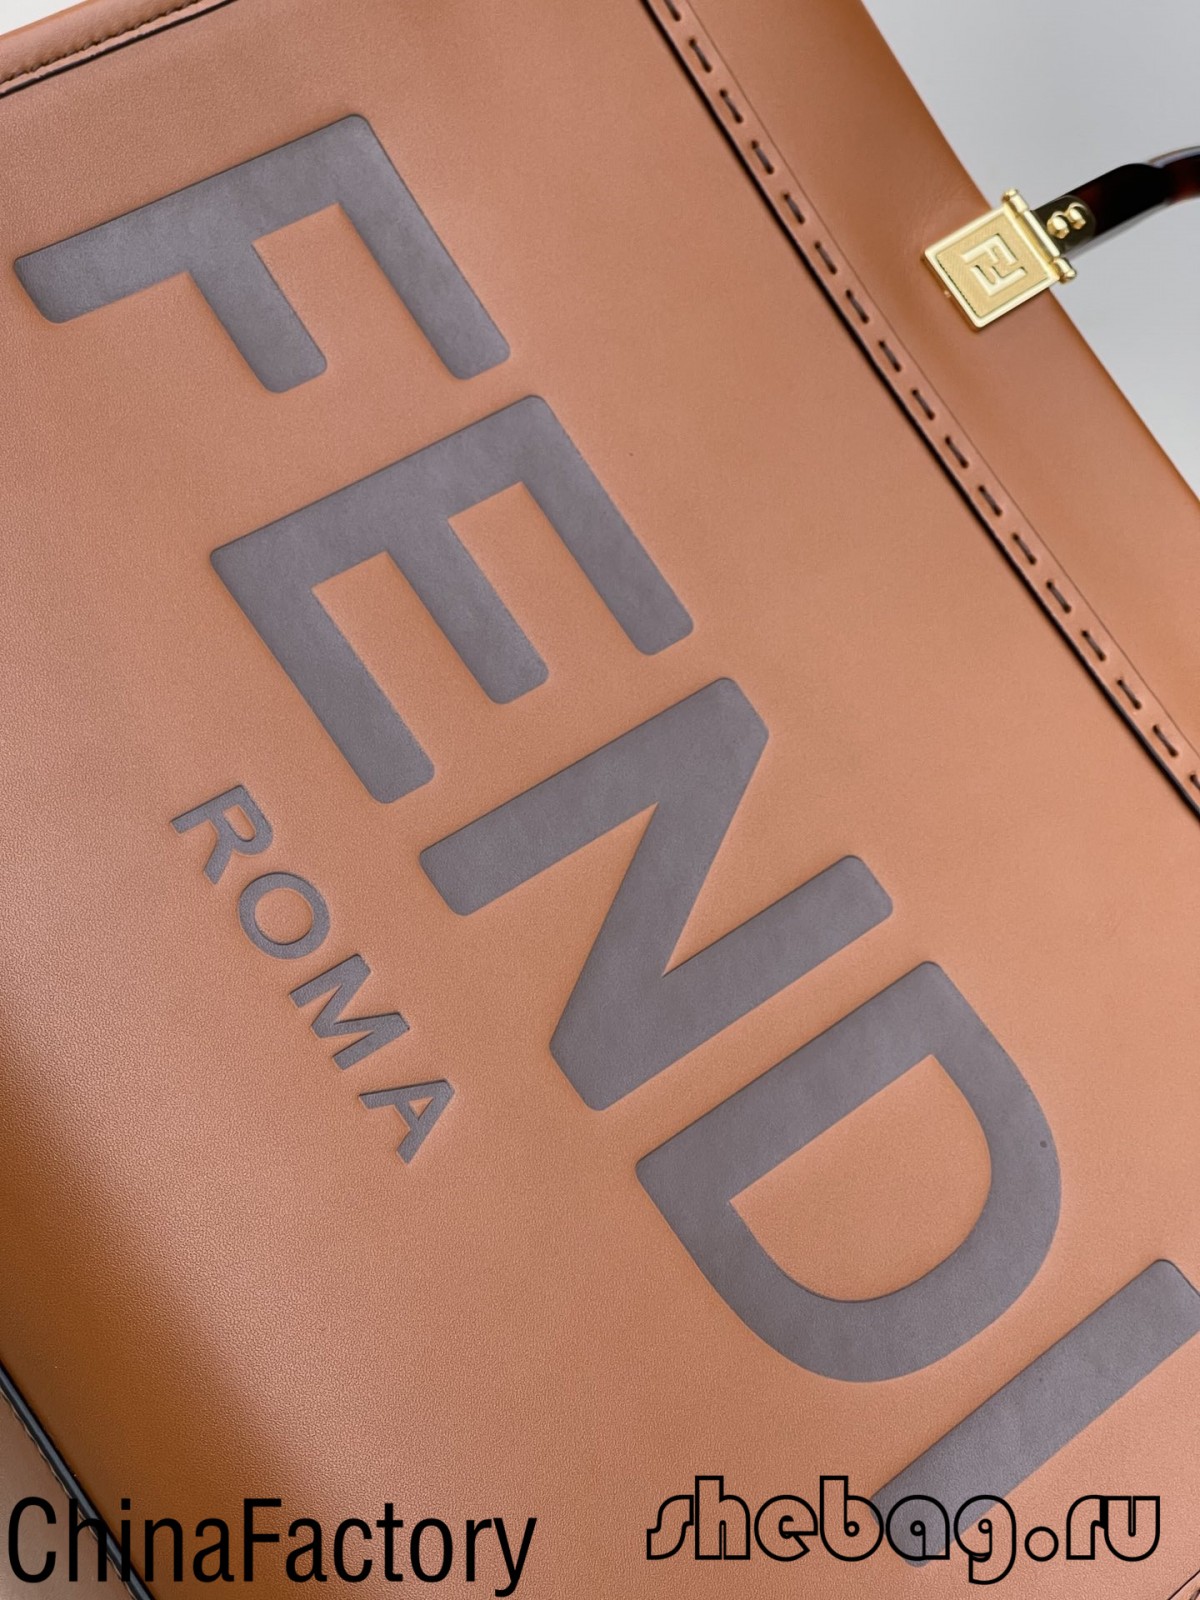 Fendi tote bag replica online sellers compare: Fendi Sunshine (2022 Hottest)-Best Quality Fake designer Bag Review, Replica designer bag ru